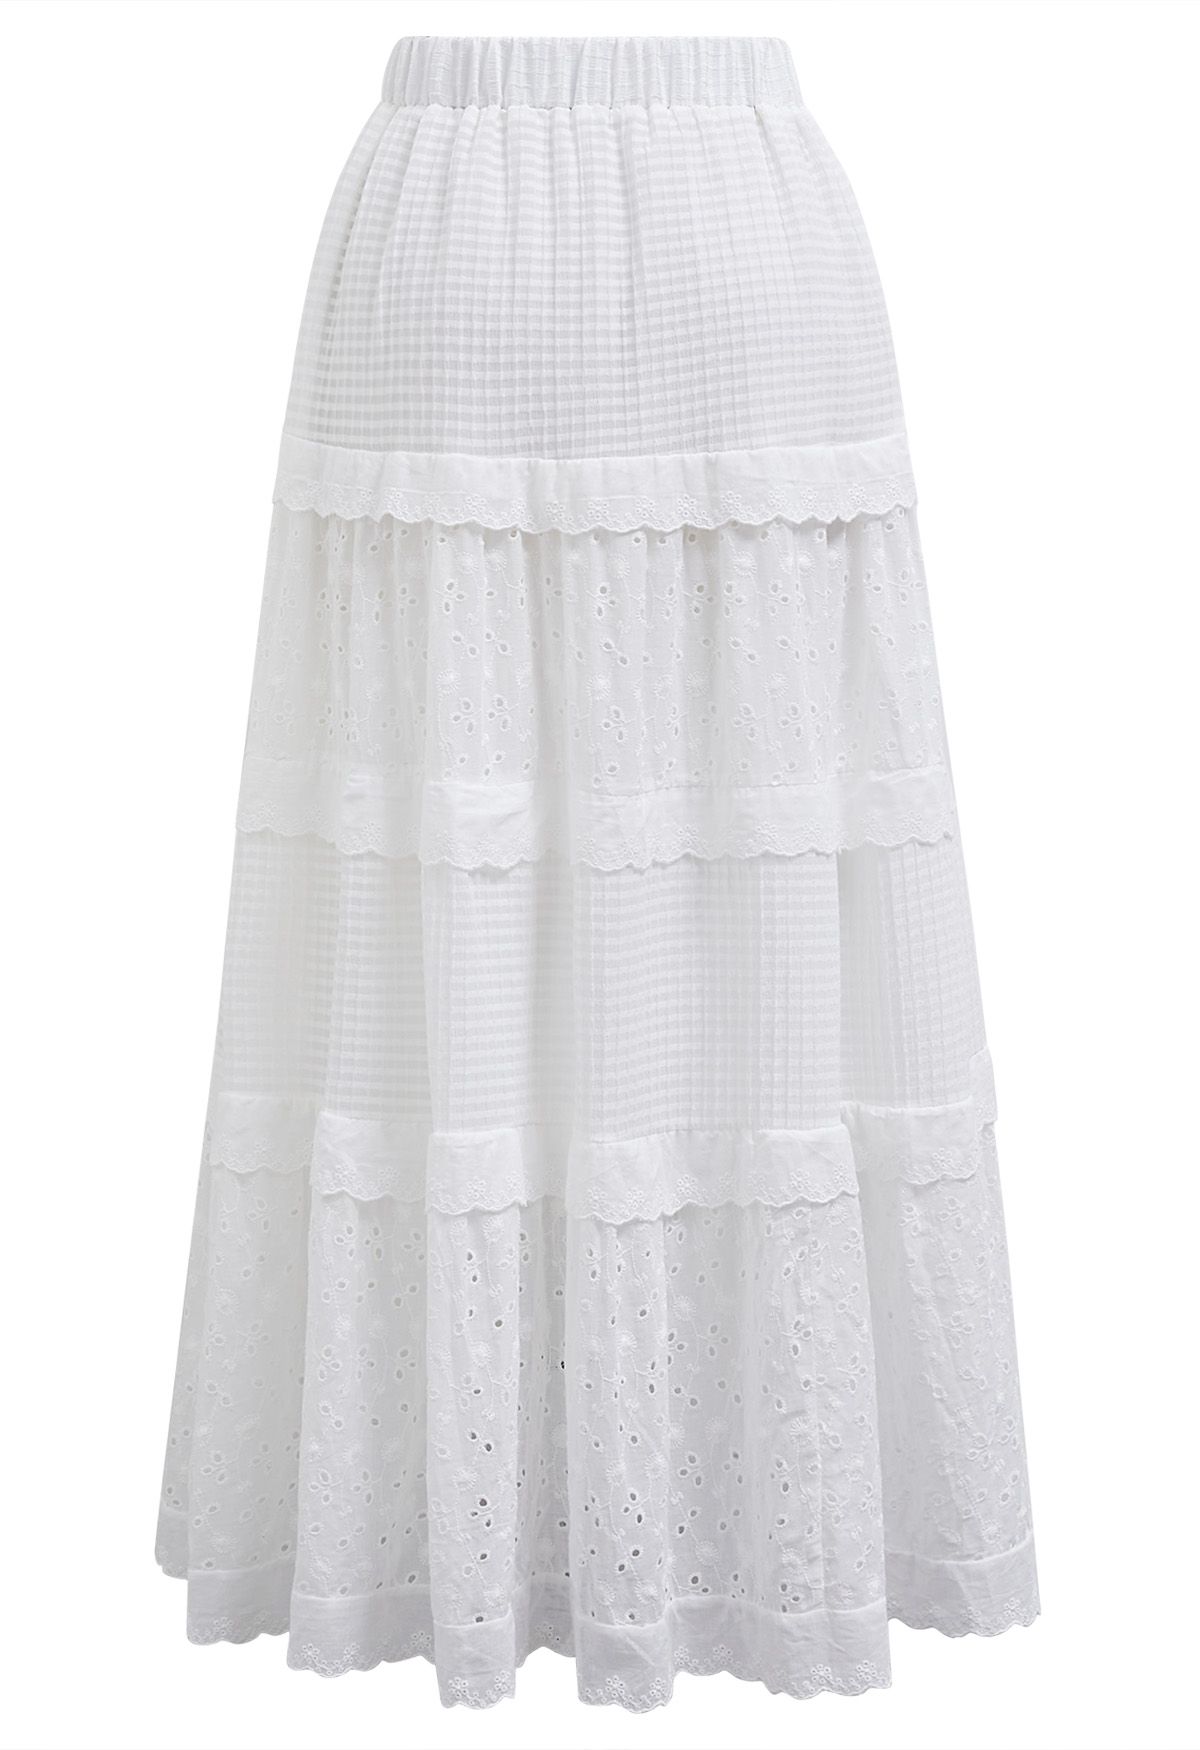 Eyelet Embroidery Ruffle Edge Cotton-Blend Skirt